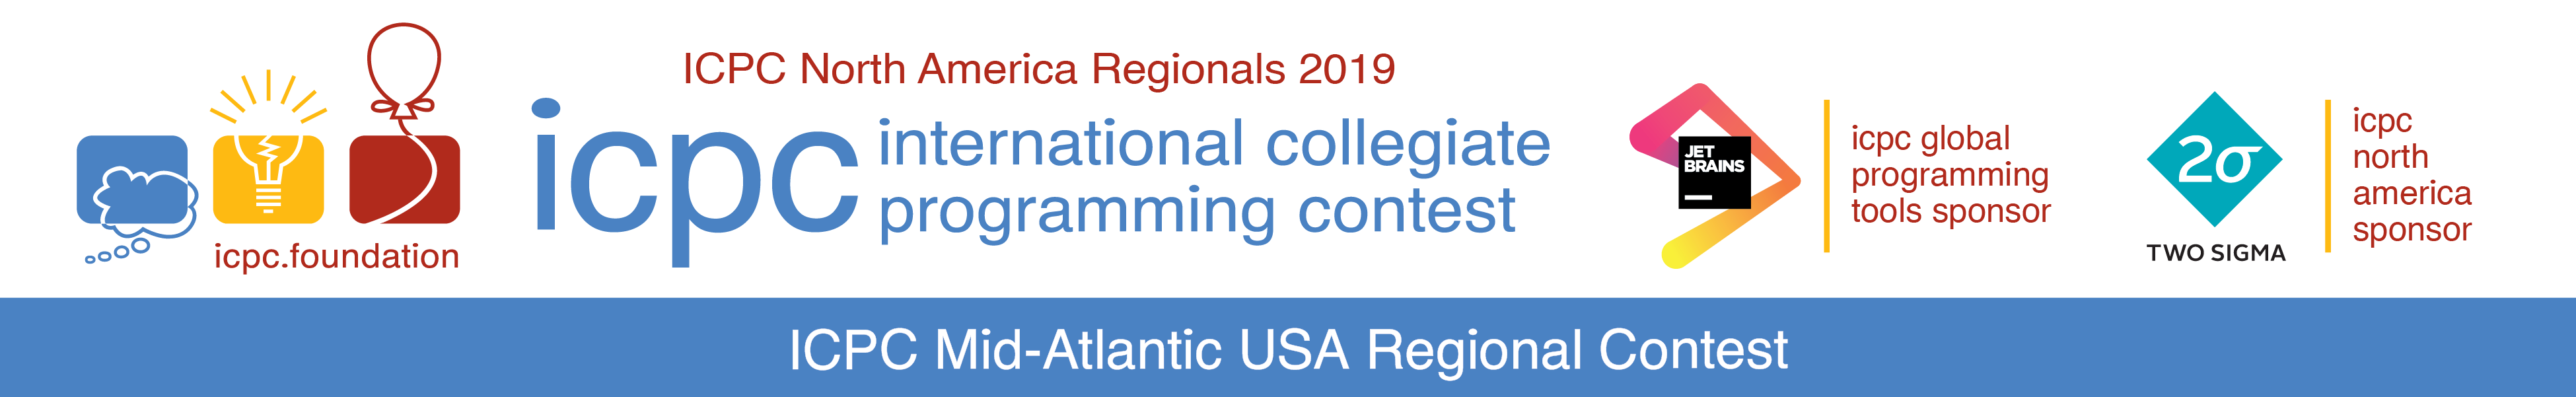 ICPC Mid-Atlantic USA Regional Contest 2019